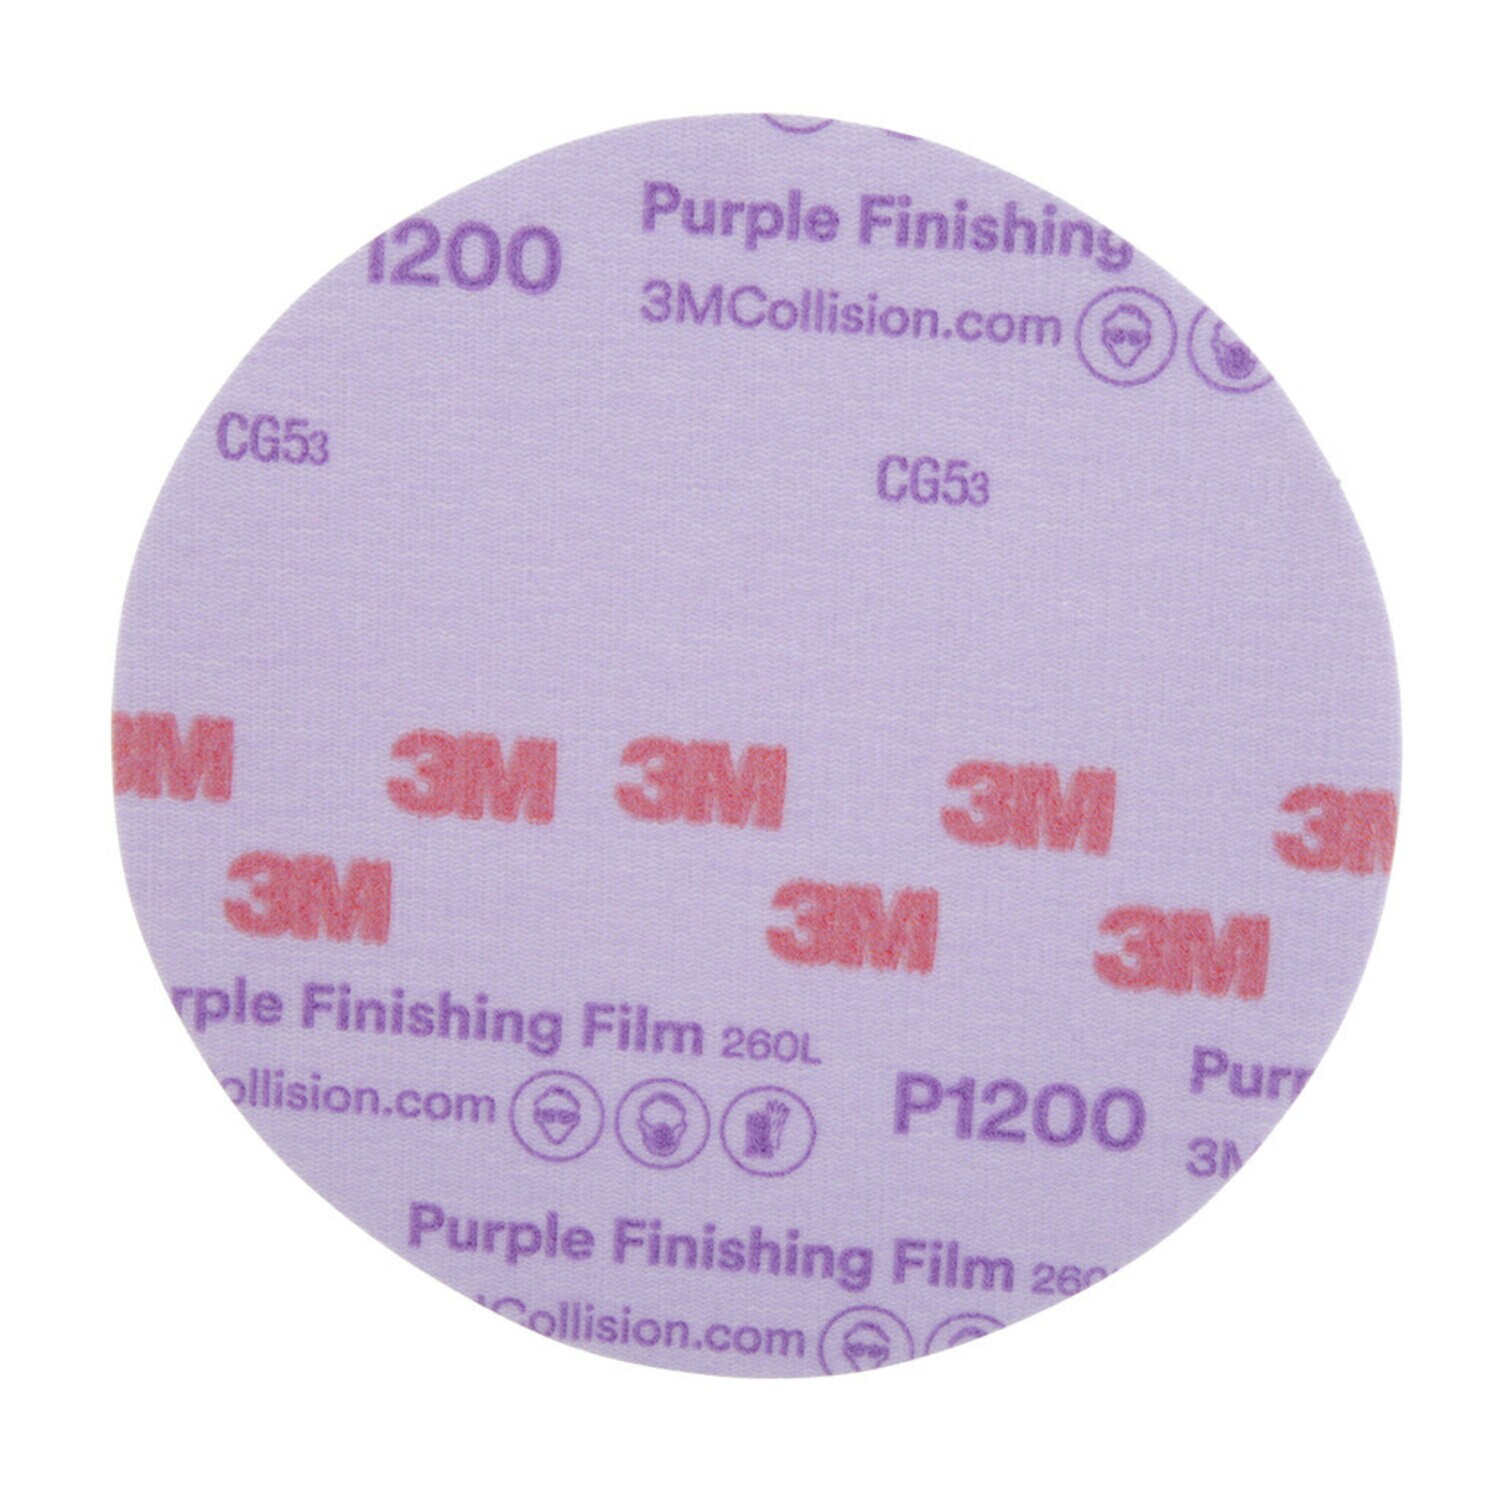 7100122780 - 3M Hookit Purple Finishing Film Abrasive Disc 260L, 30668, 6 in,
P1200, 50 discs per carton, 4 cartons per case